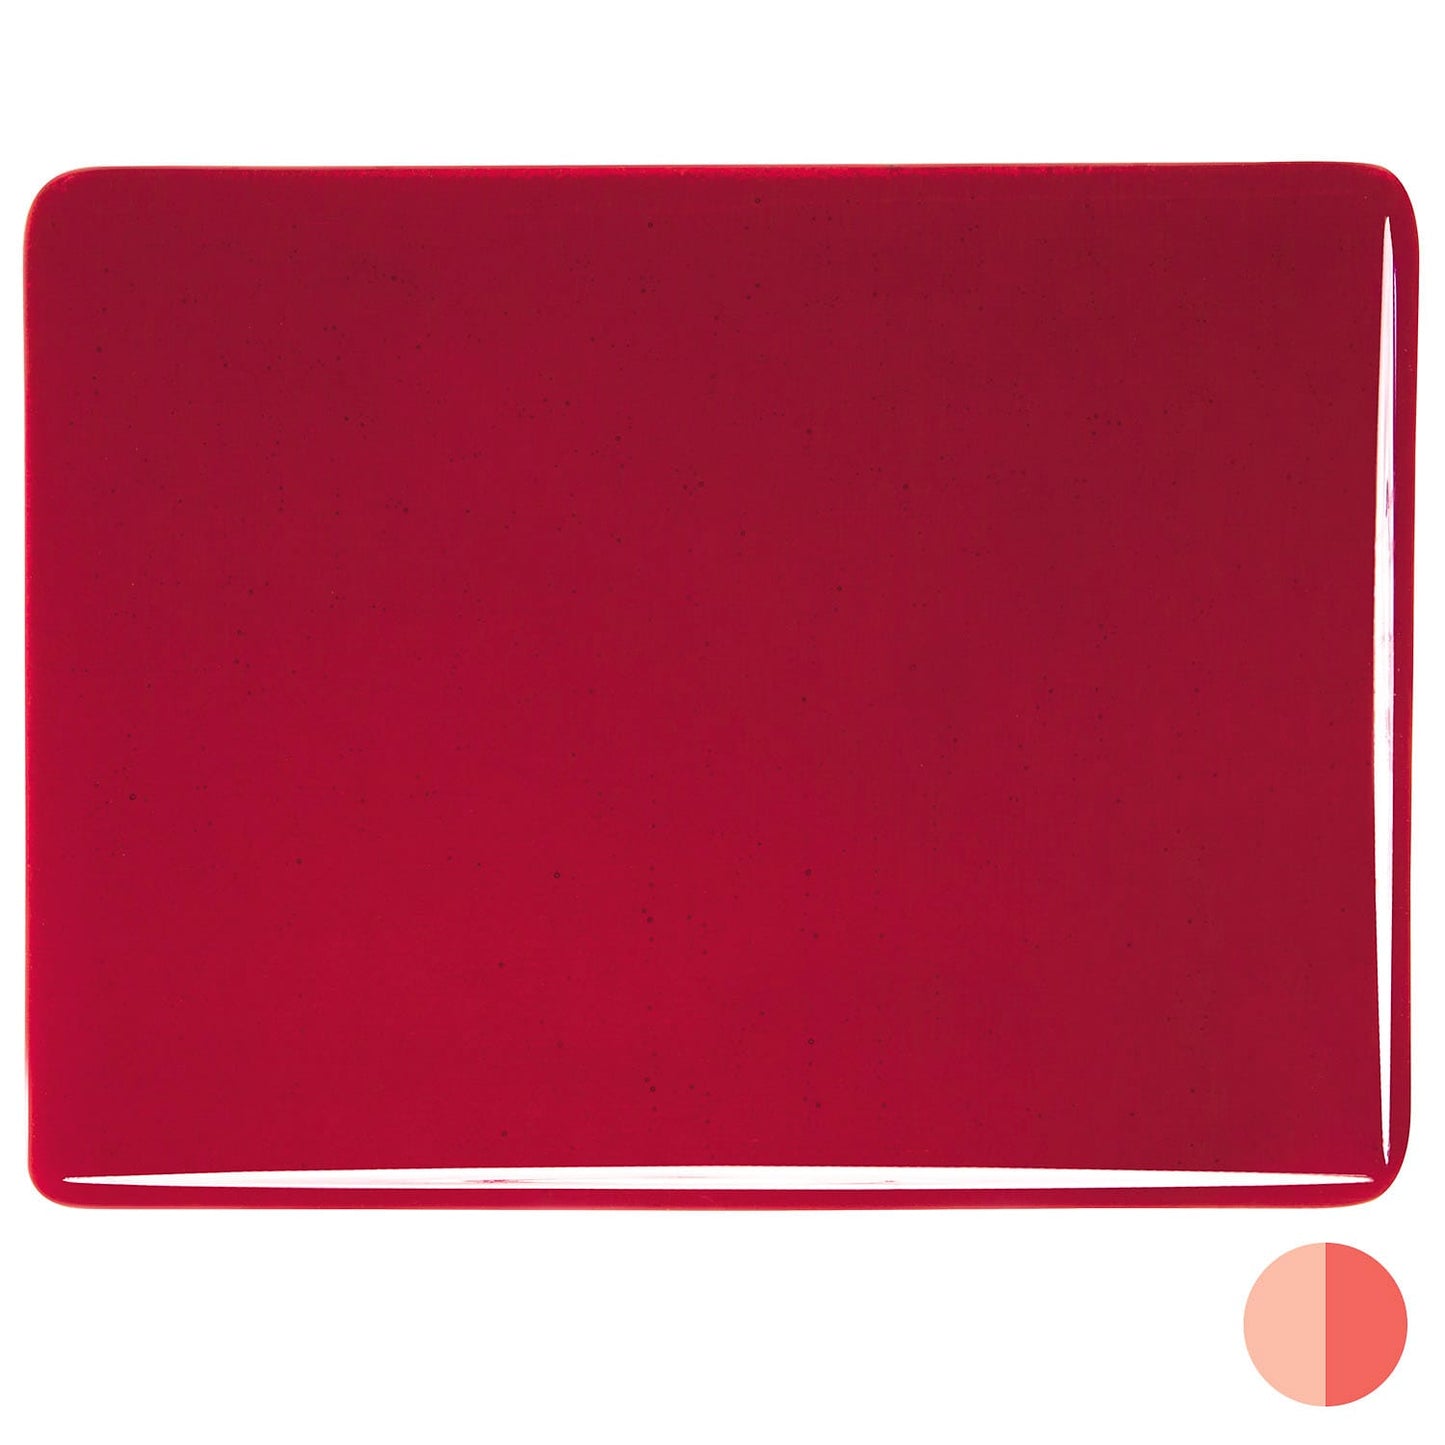 Bullseye COE90 Fusing Glass 001322 Garnet Red Half Sheet